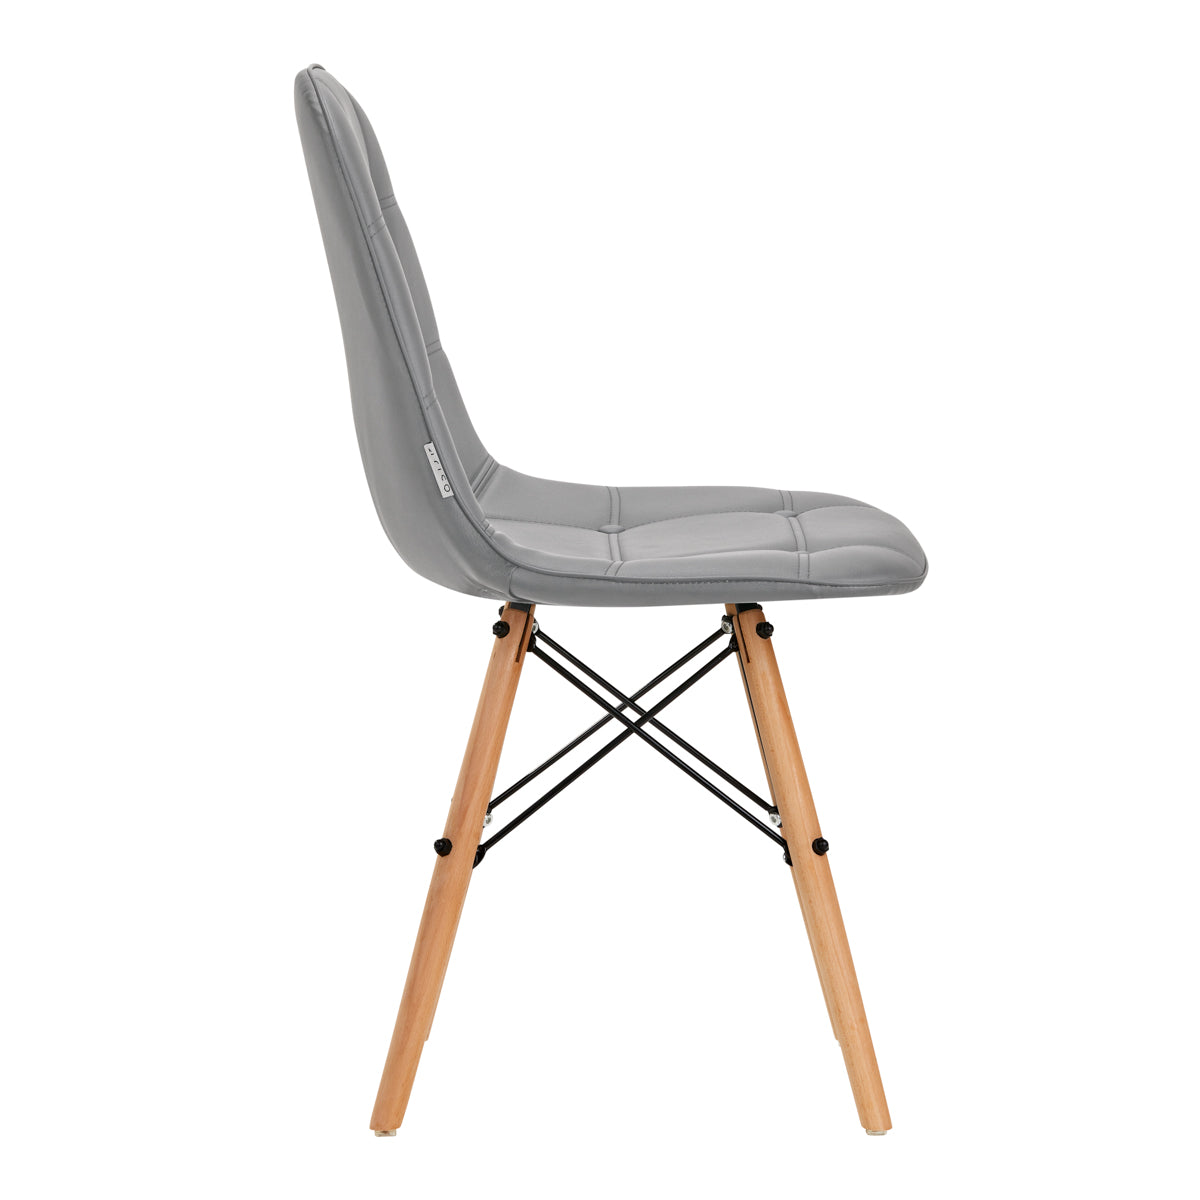 4Rico Cosmetic chair QS-185 gray